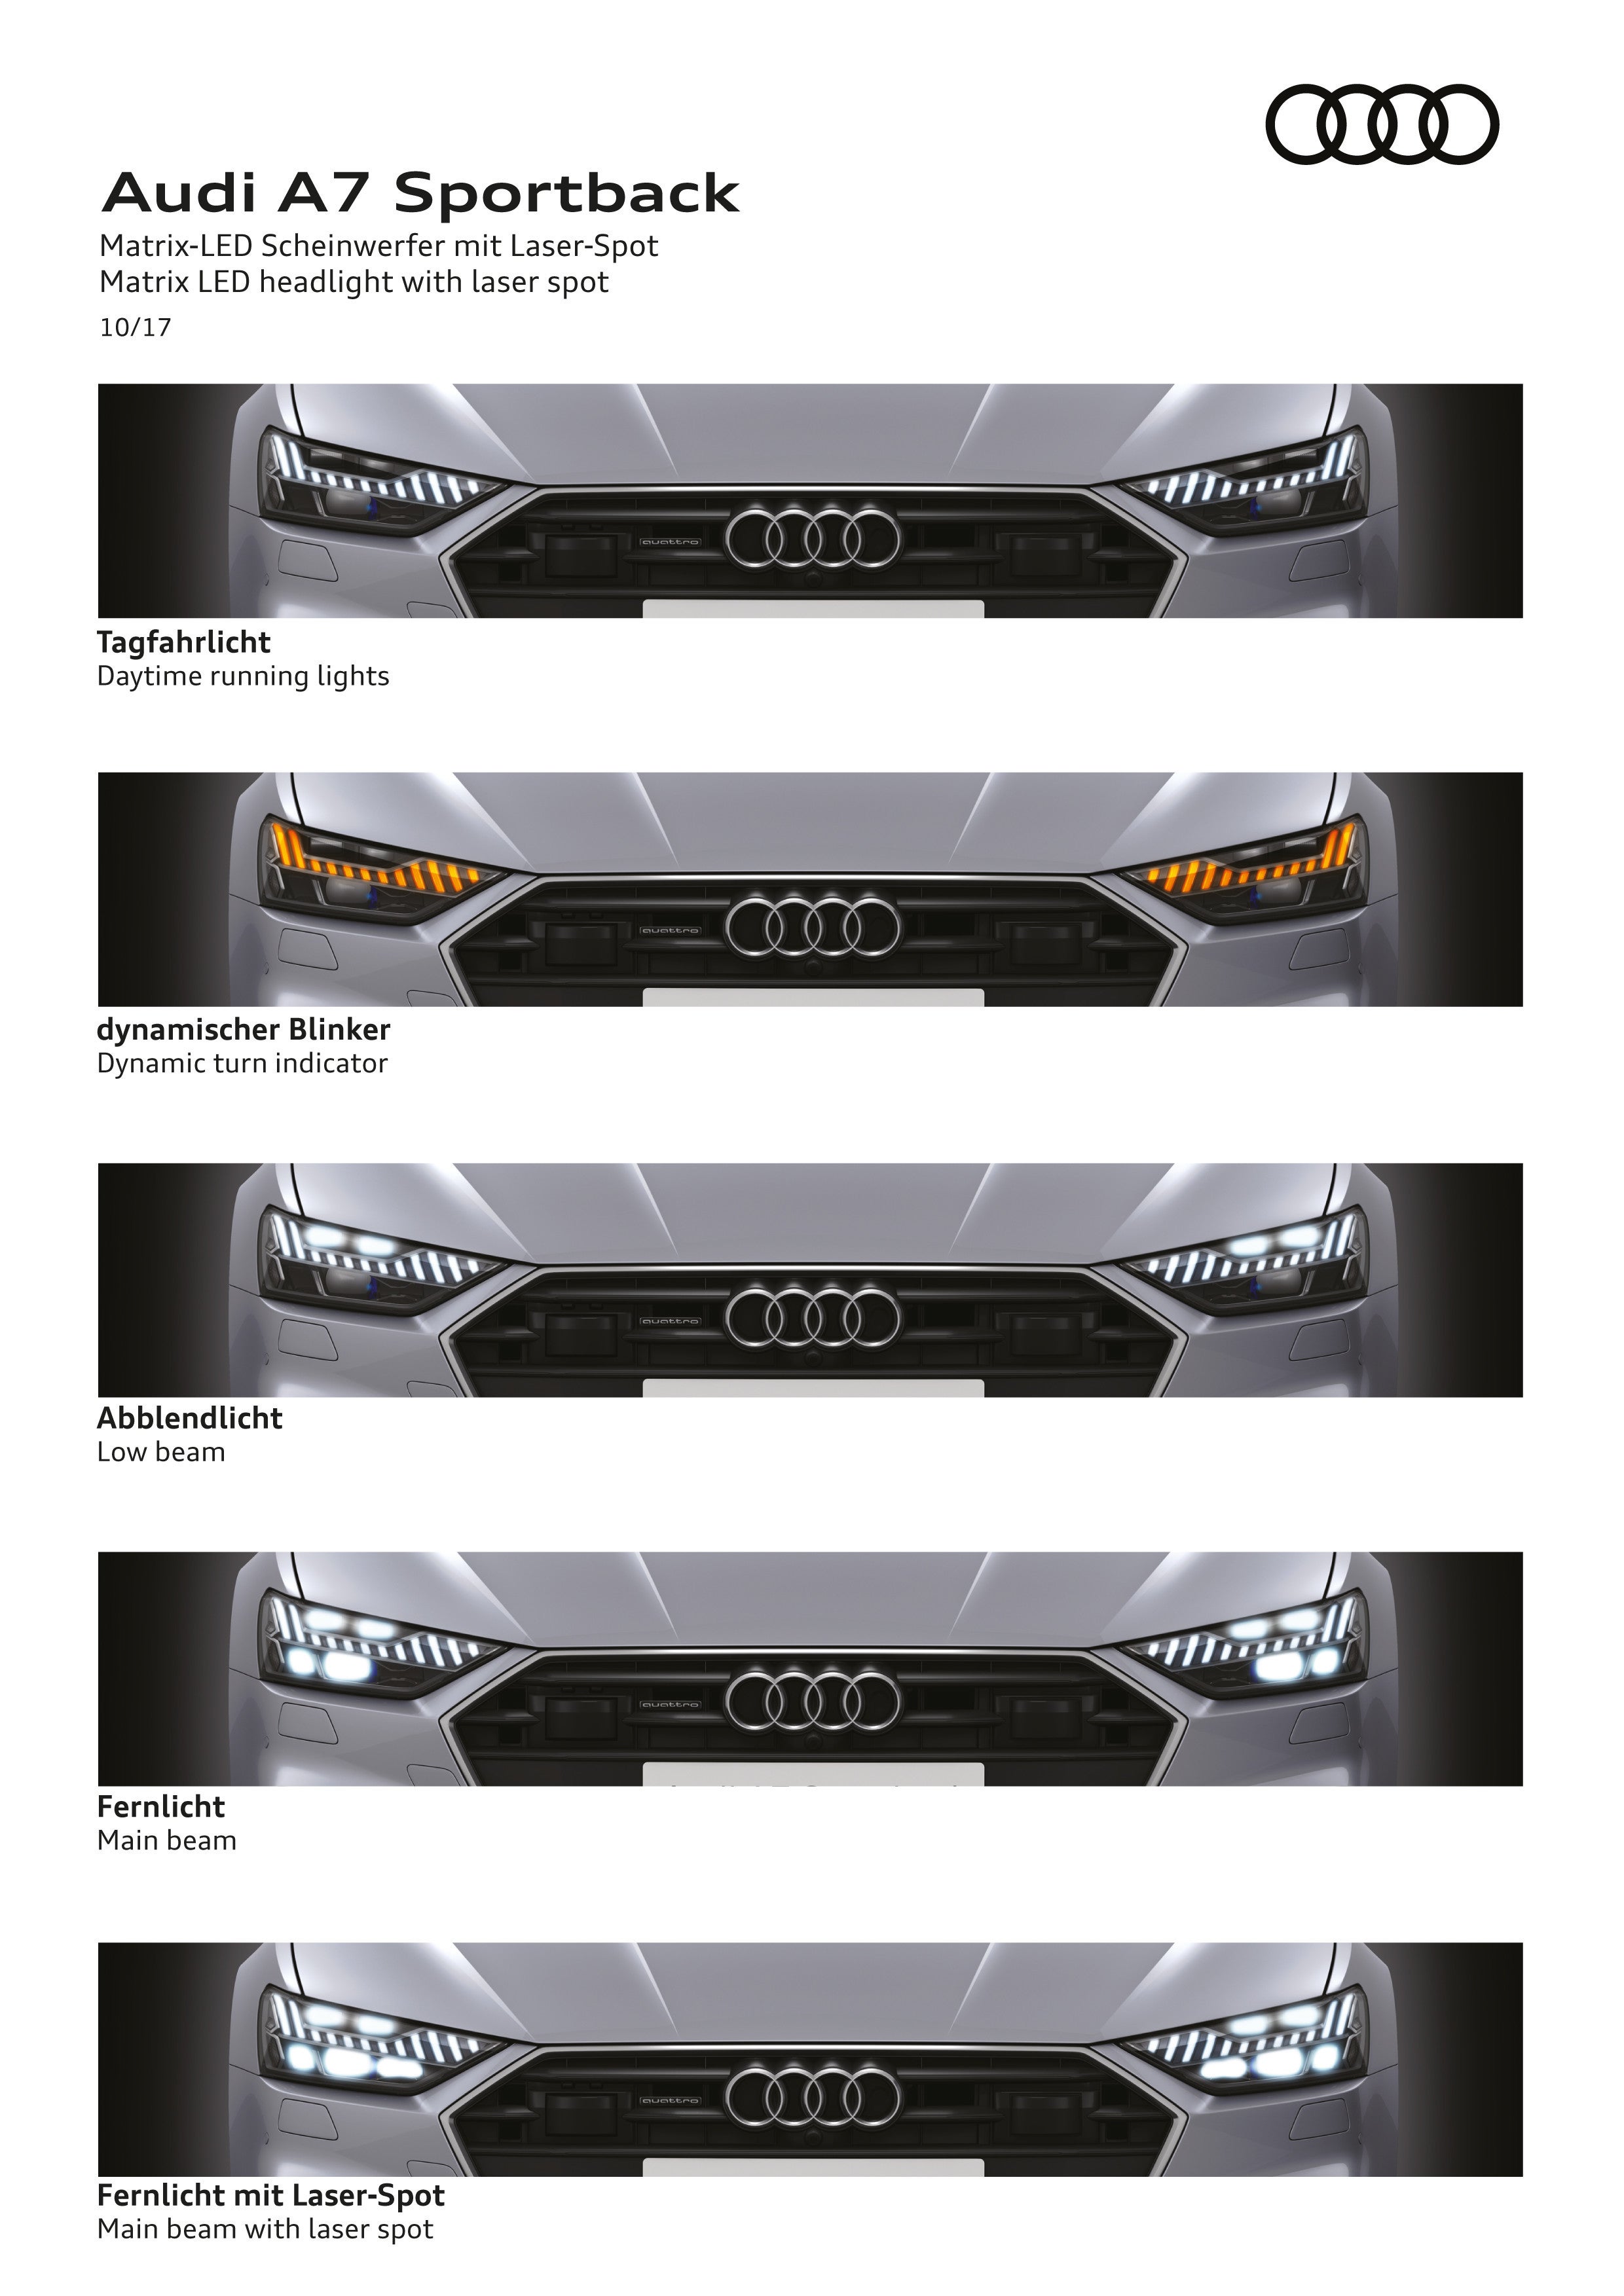 Deep Dive: Audi A7's HD Matrix LED Headlights with Audi Laser Light